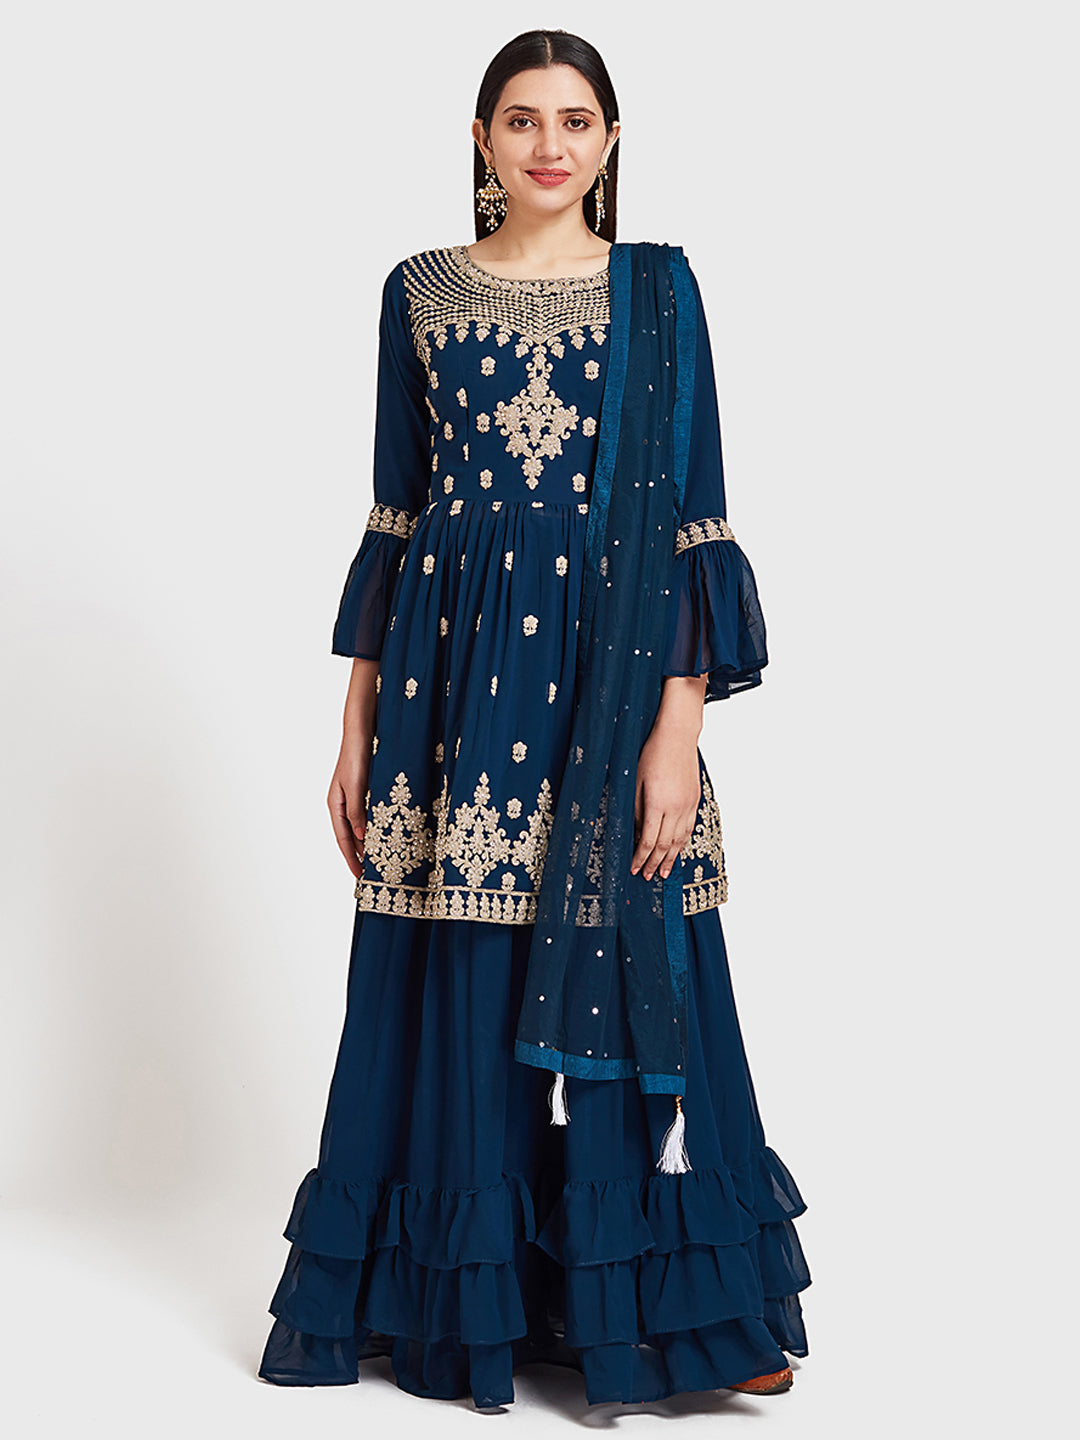 Neeru's Peacock Color Georgette Fabric Suit-Short Anarkali